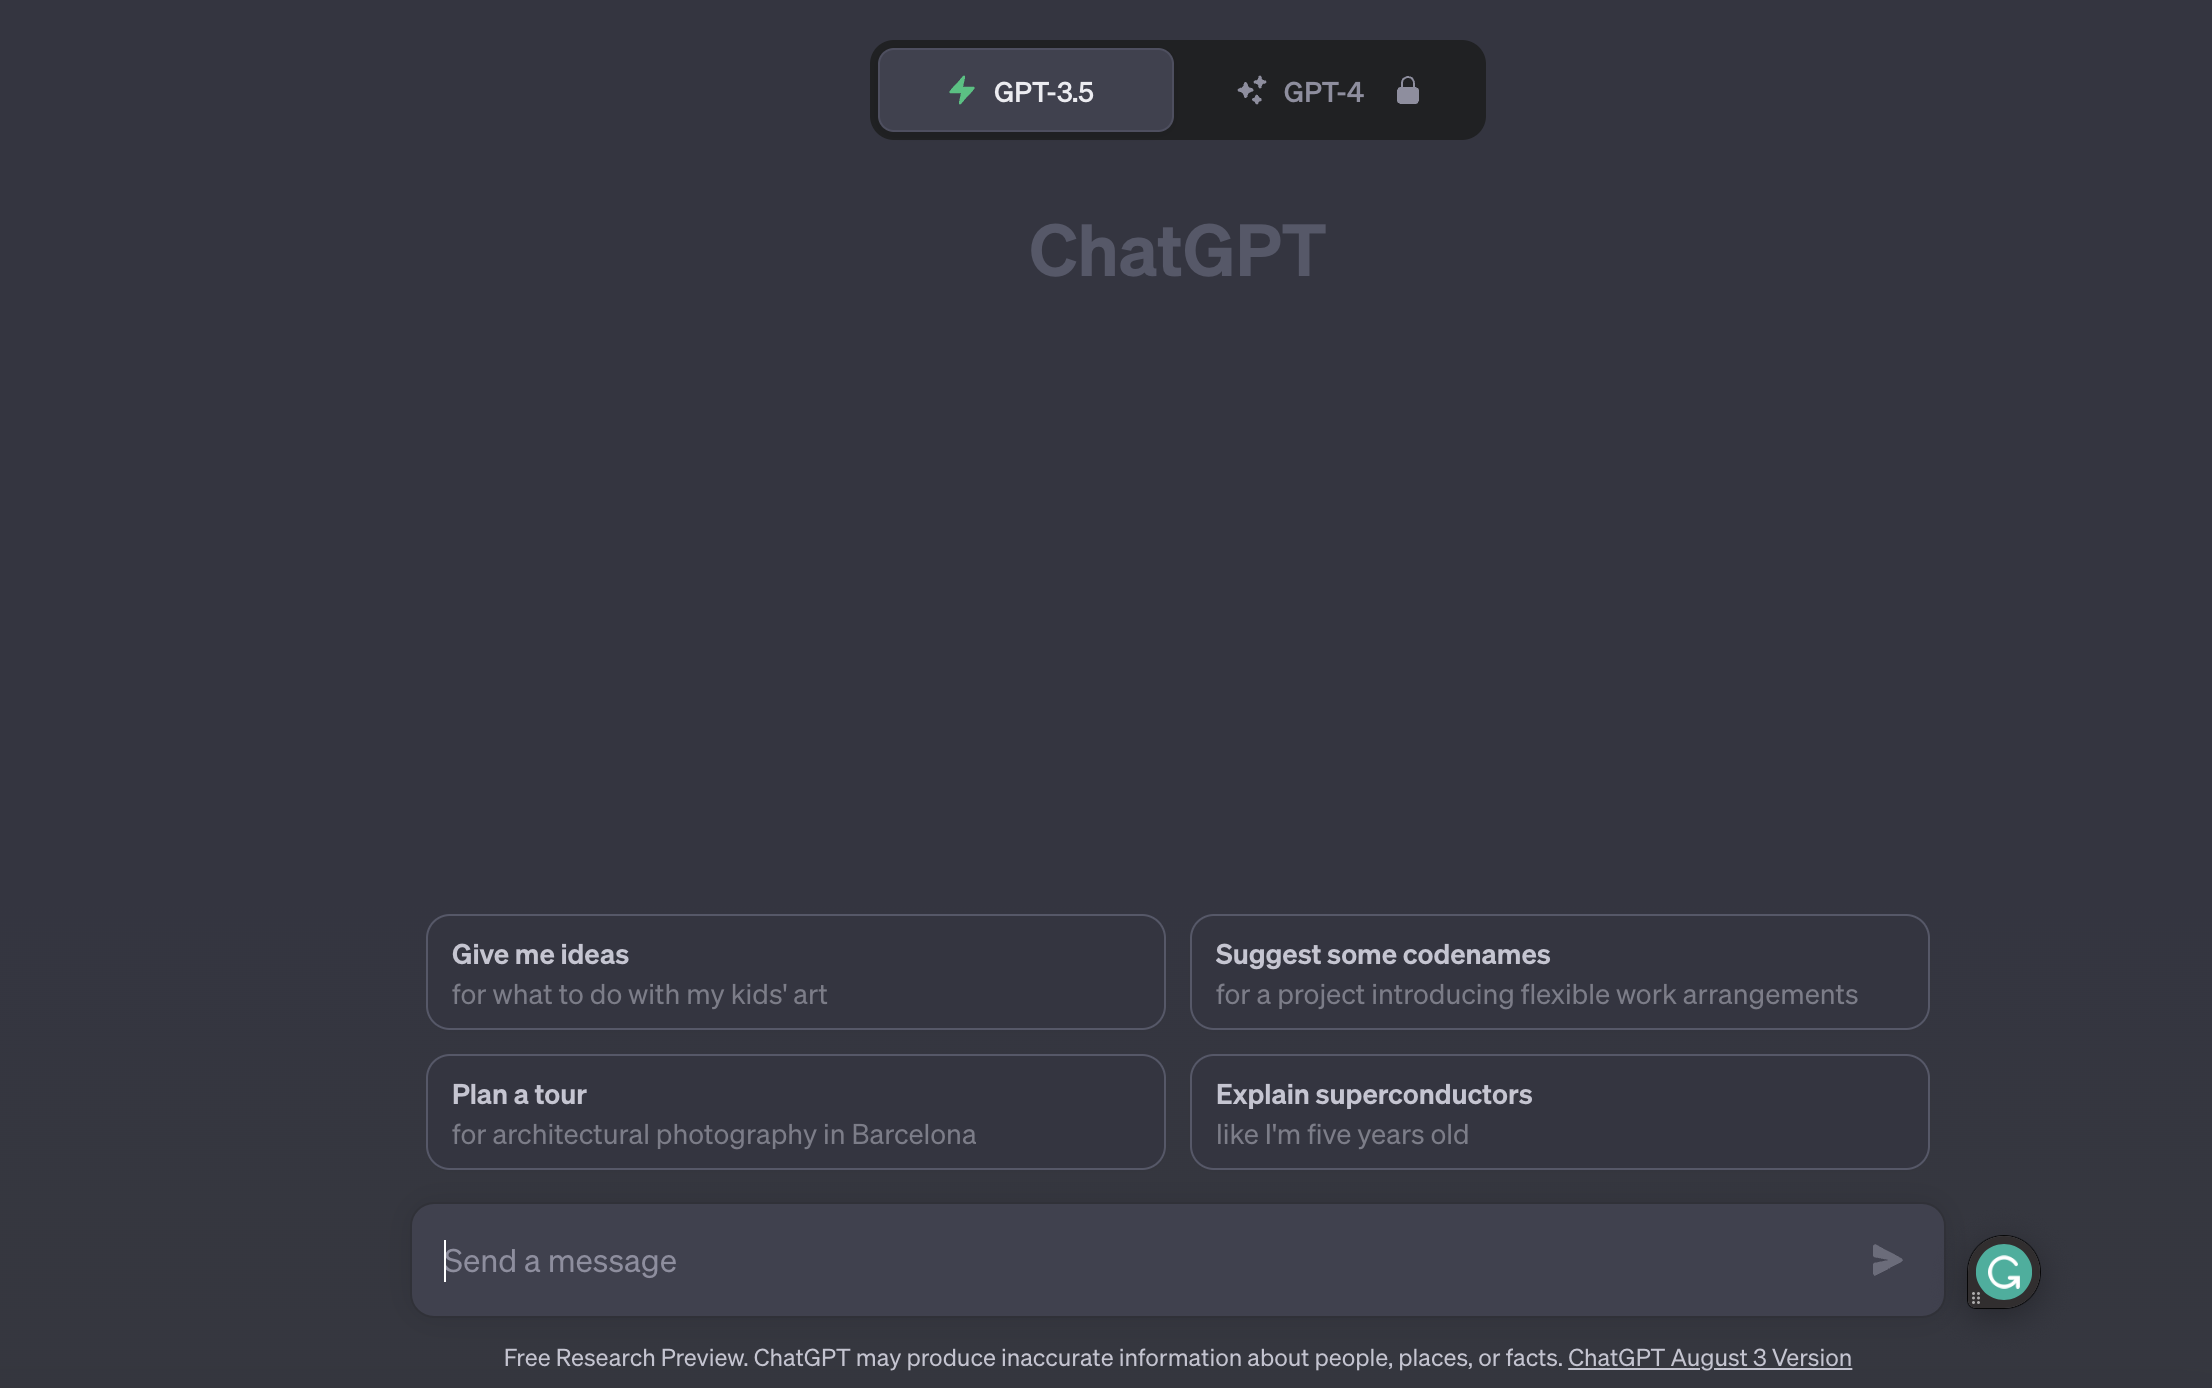 ChatGPT is a powerful AI language model developed by OpenAI.